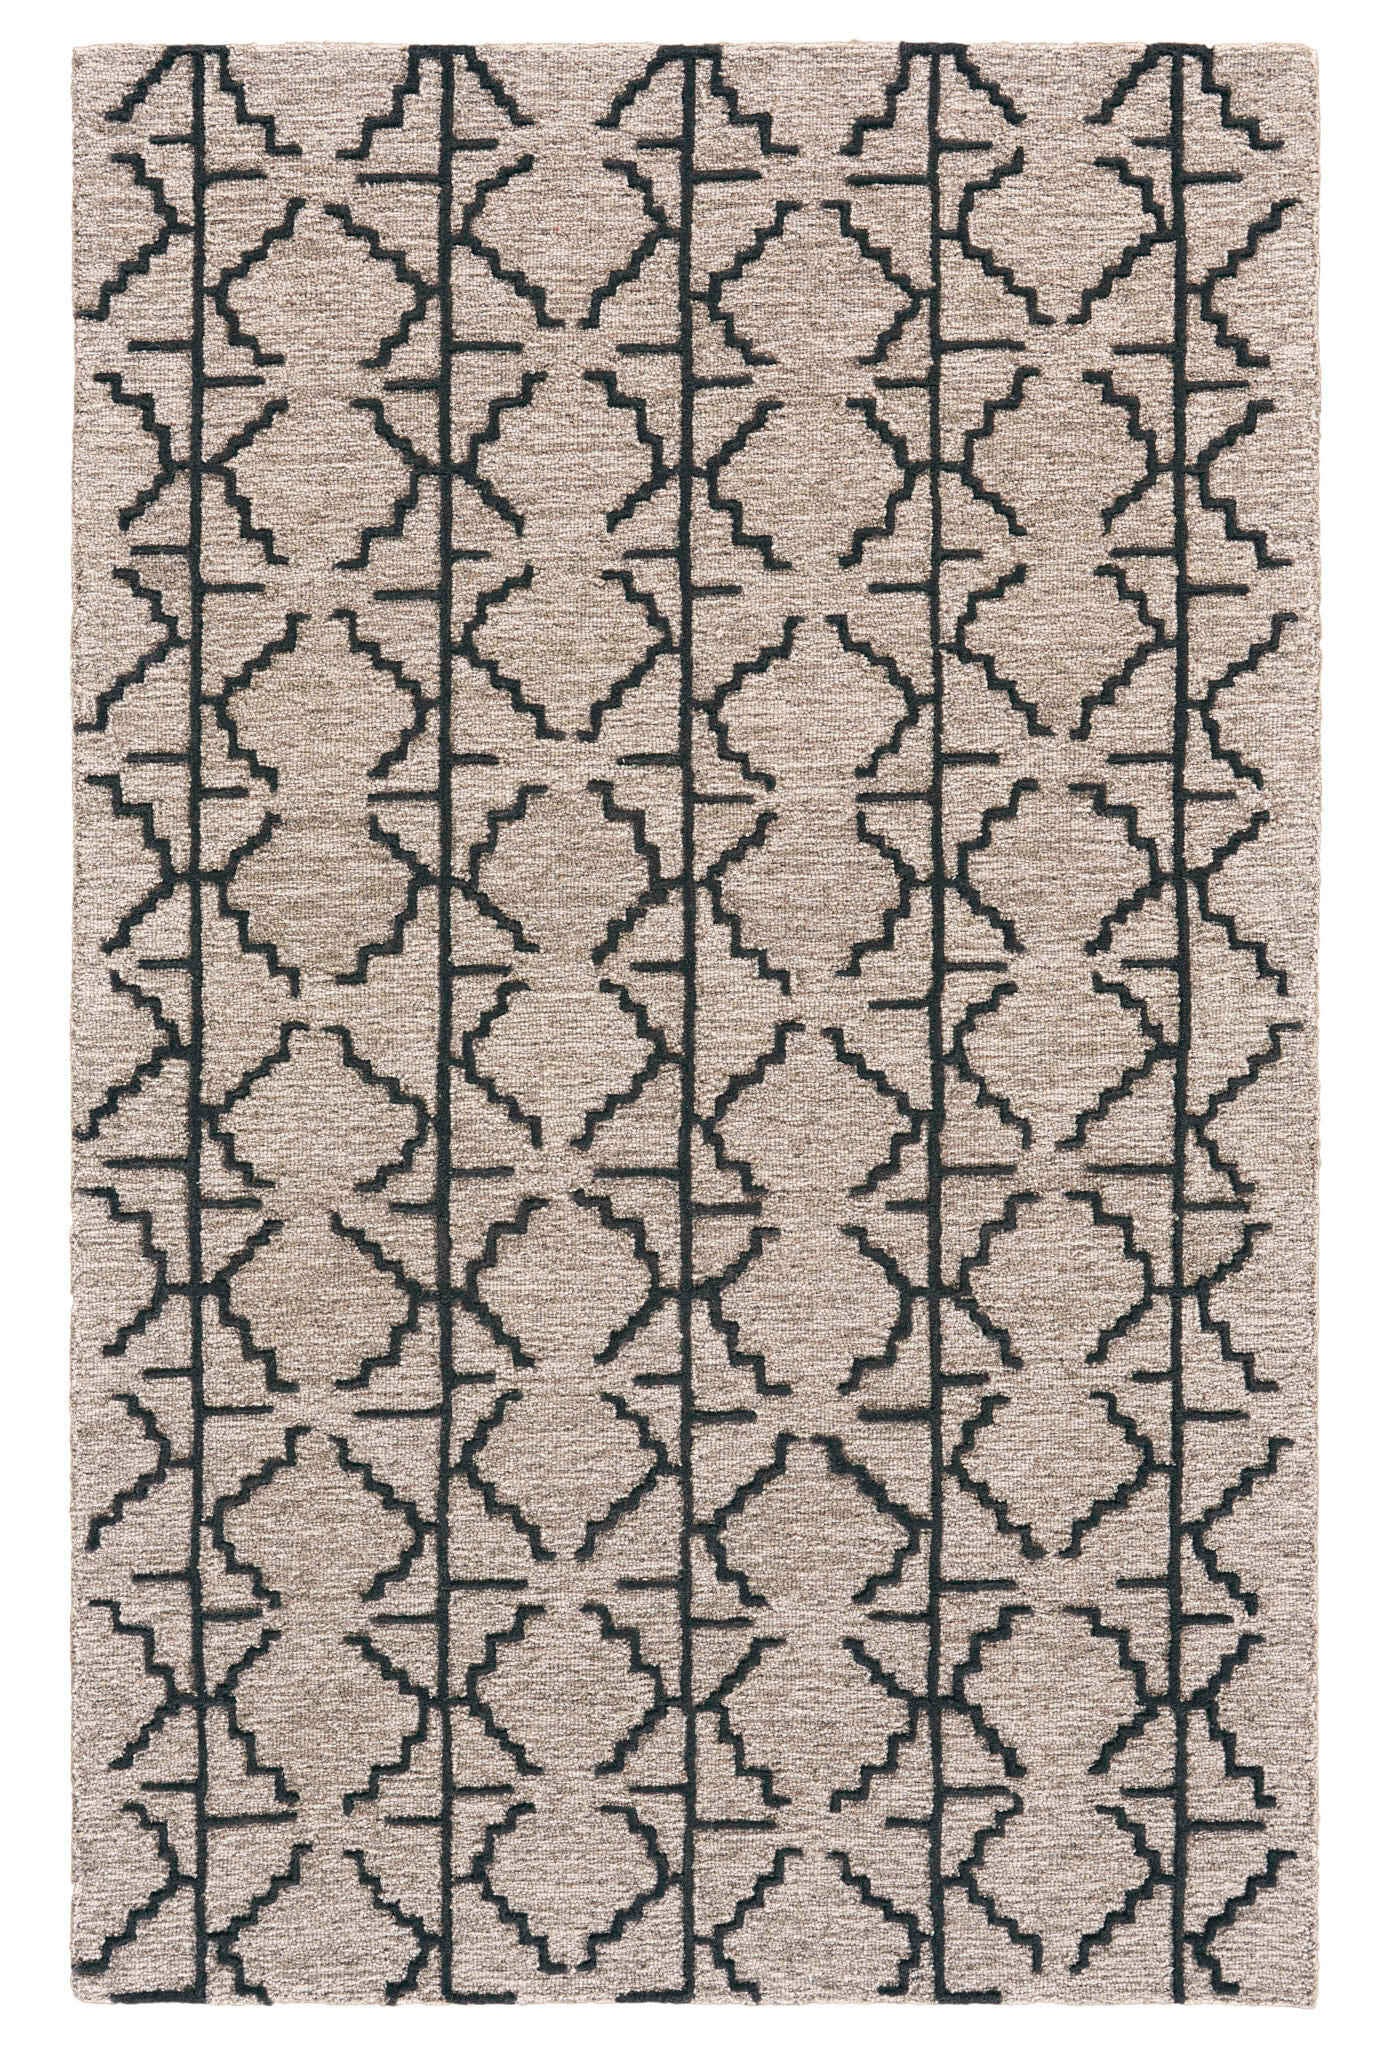 Foundry Select Mcdermott Handmade Hand Tufted Wool Charcoal/Gray